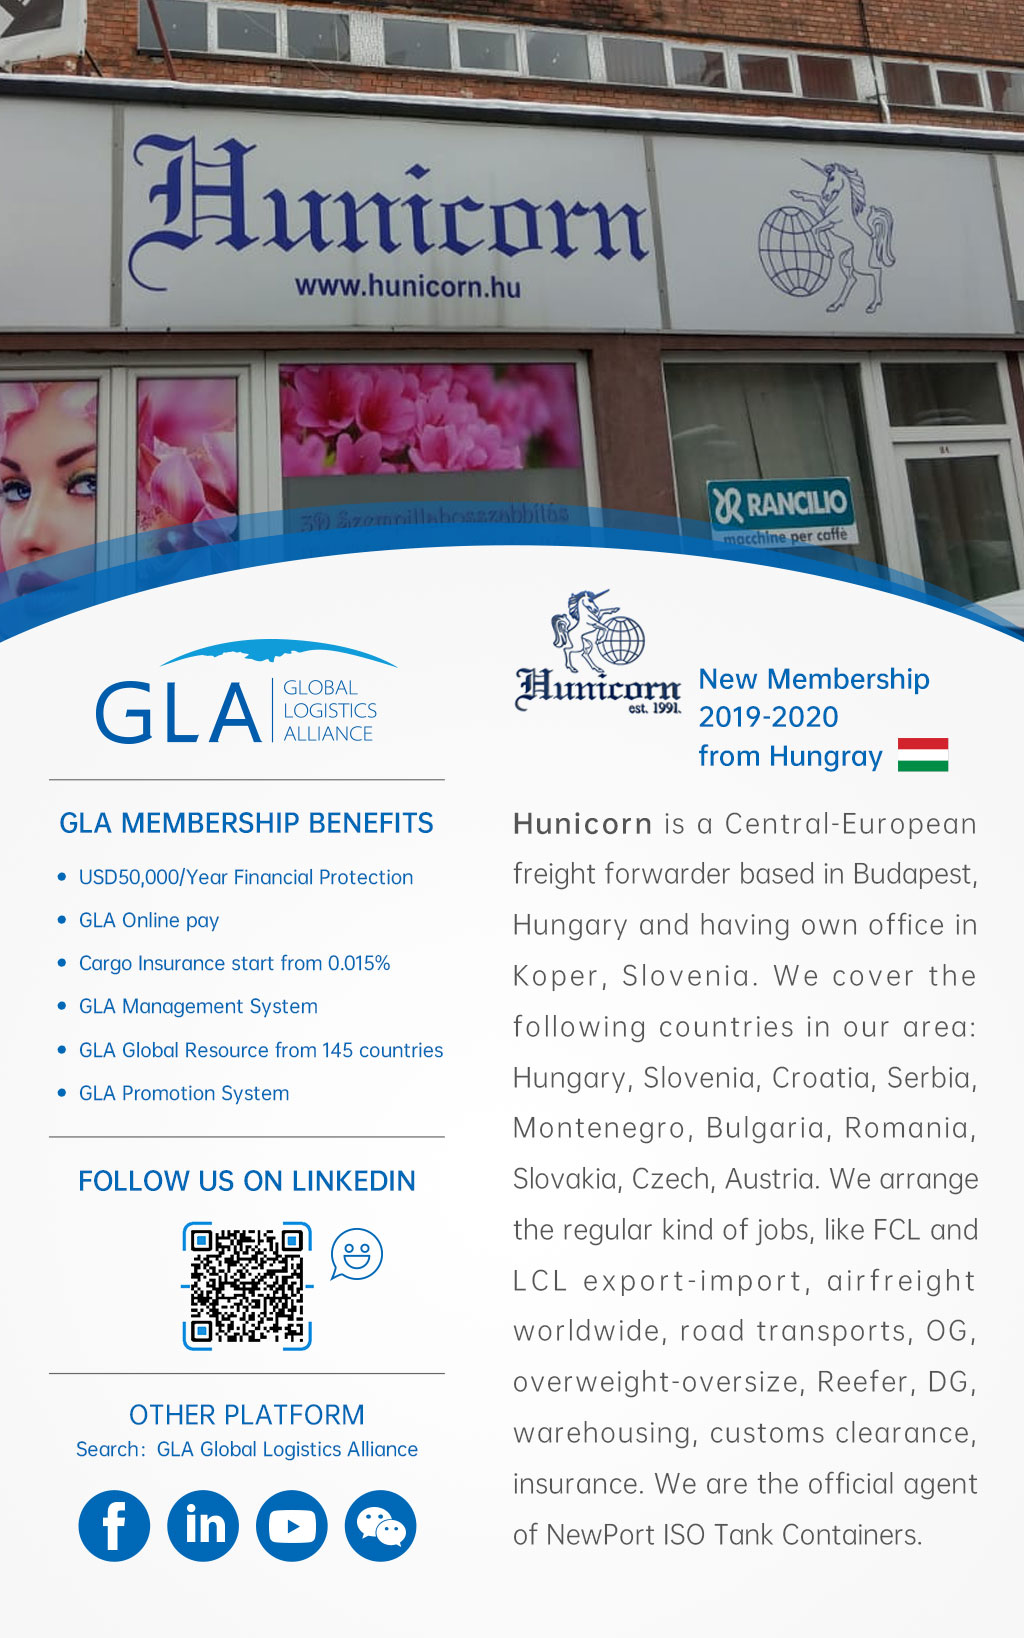 GLA New Membership — Hunicorn International Forwarding Pvt Ltd from Hungary